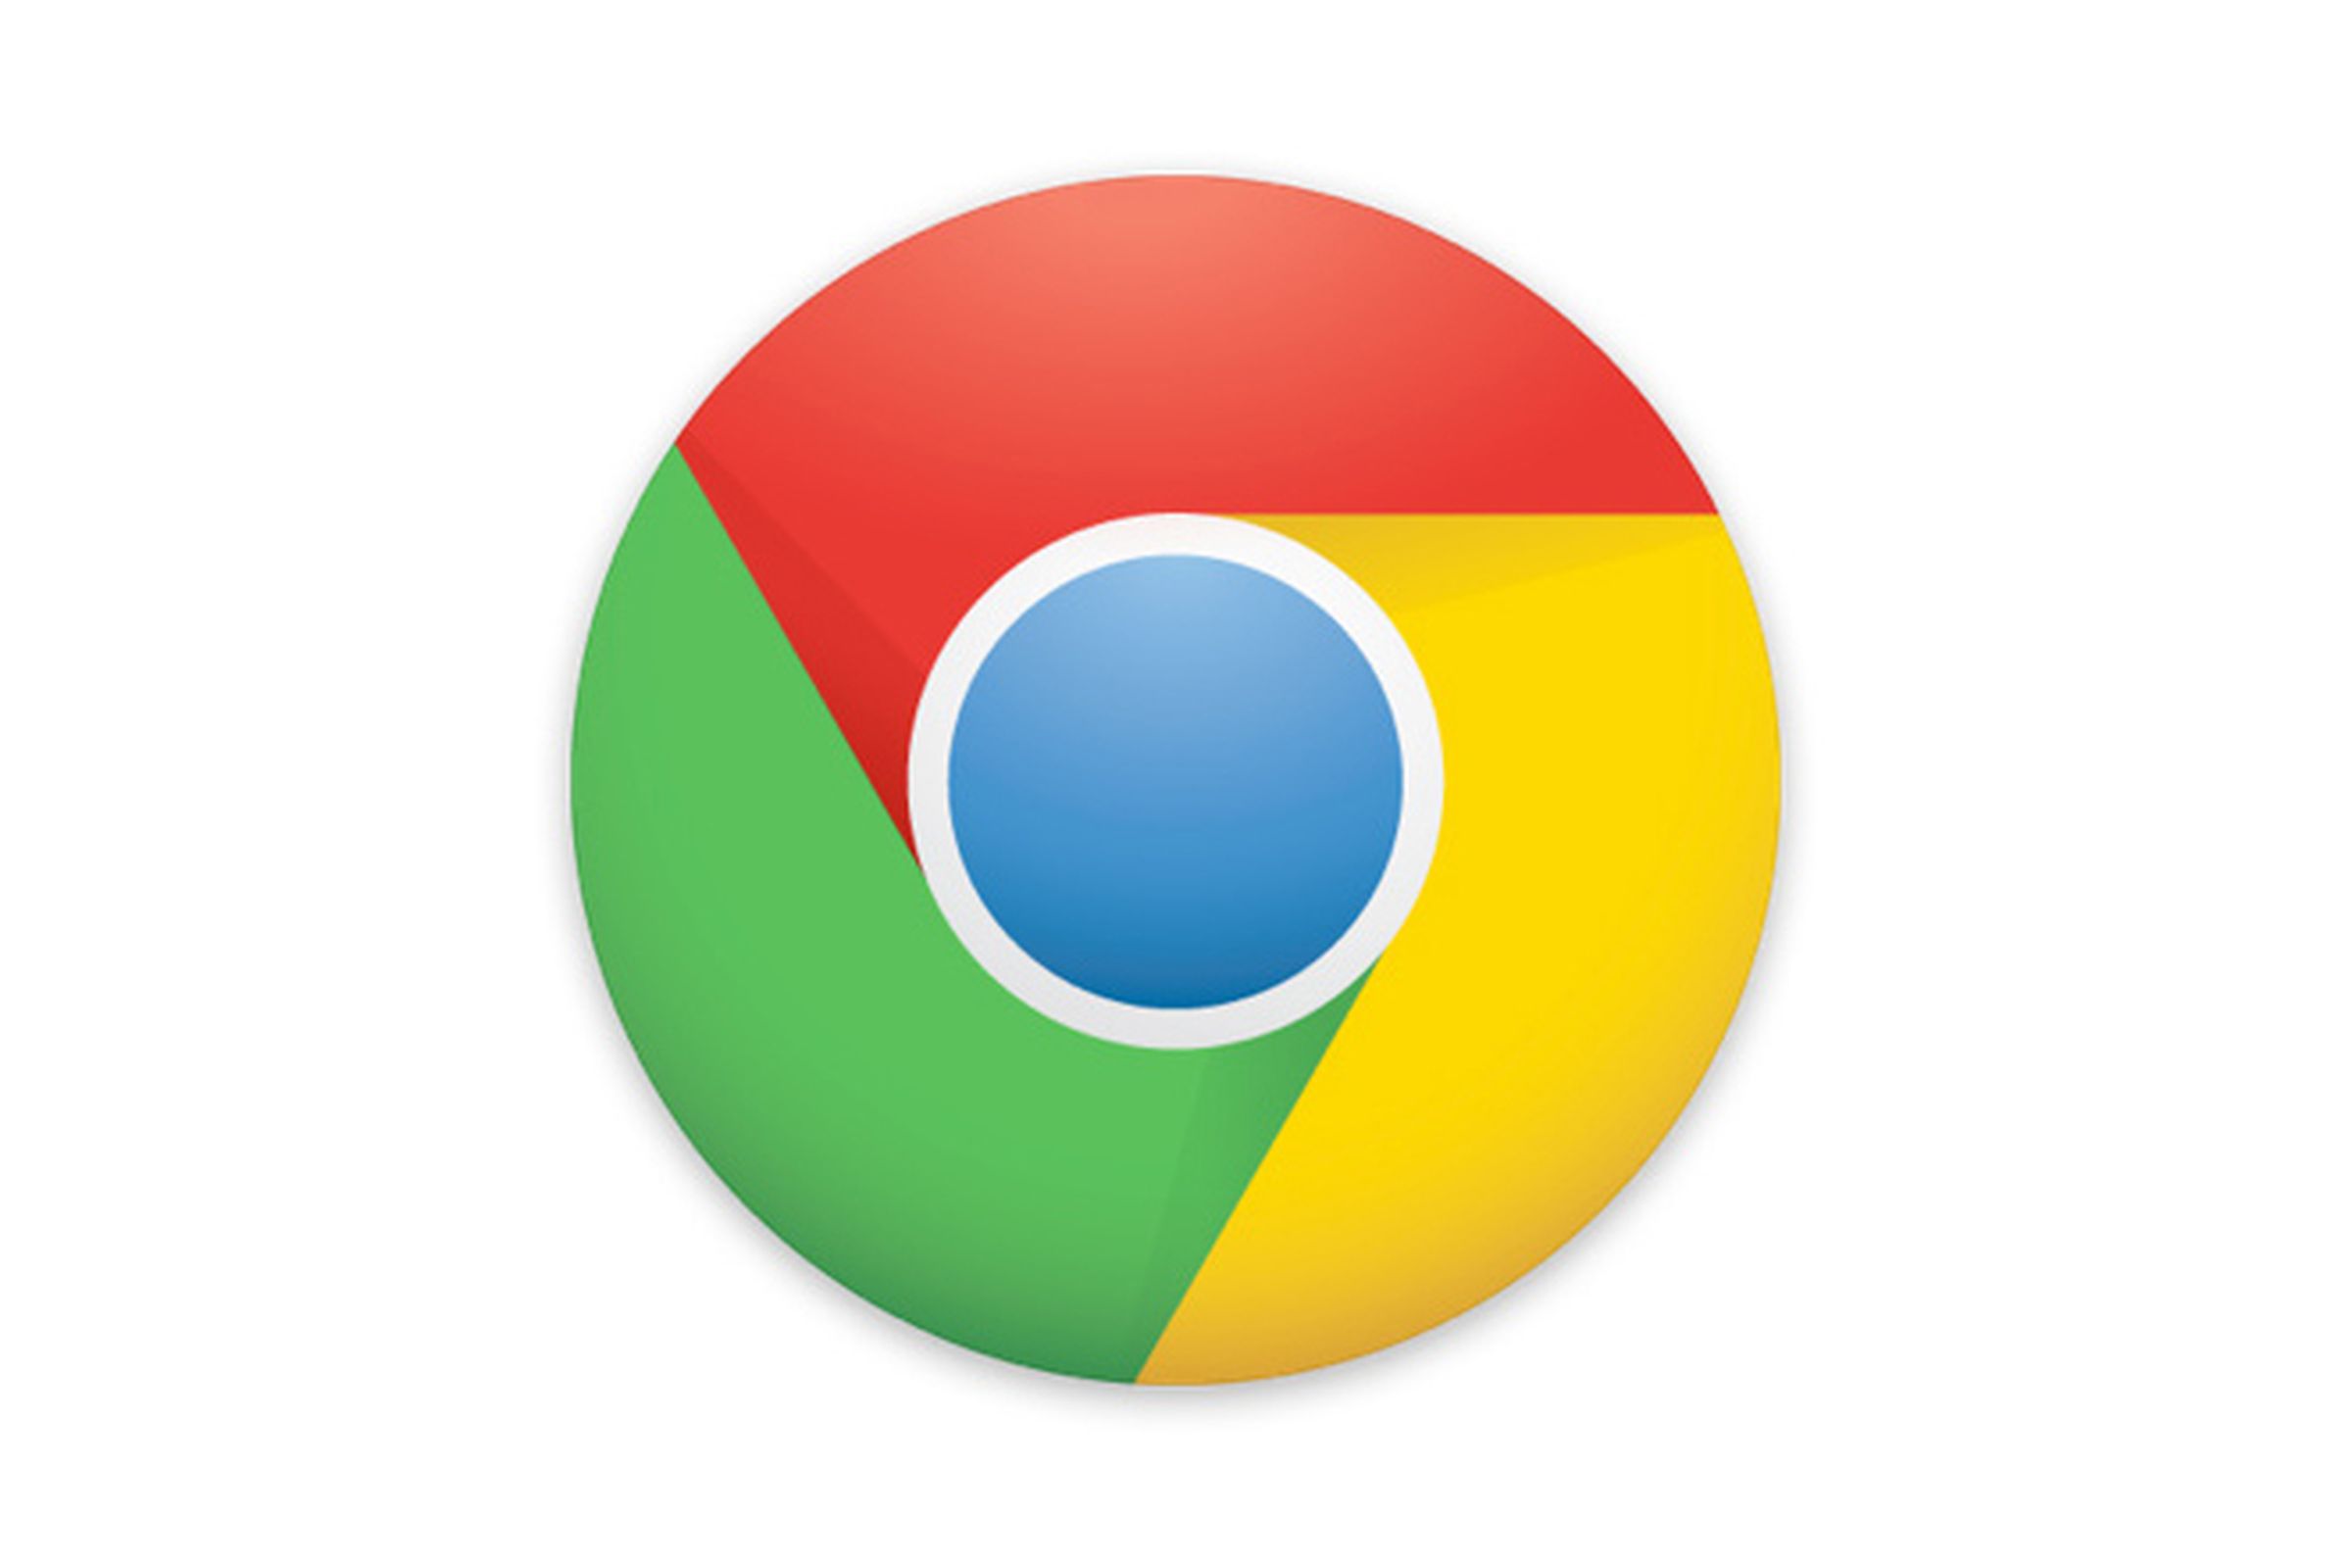 Chrome logo stock